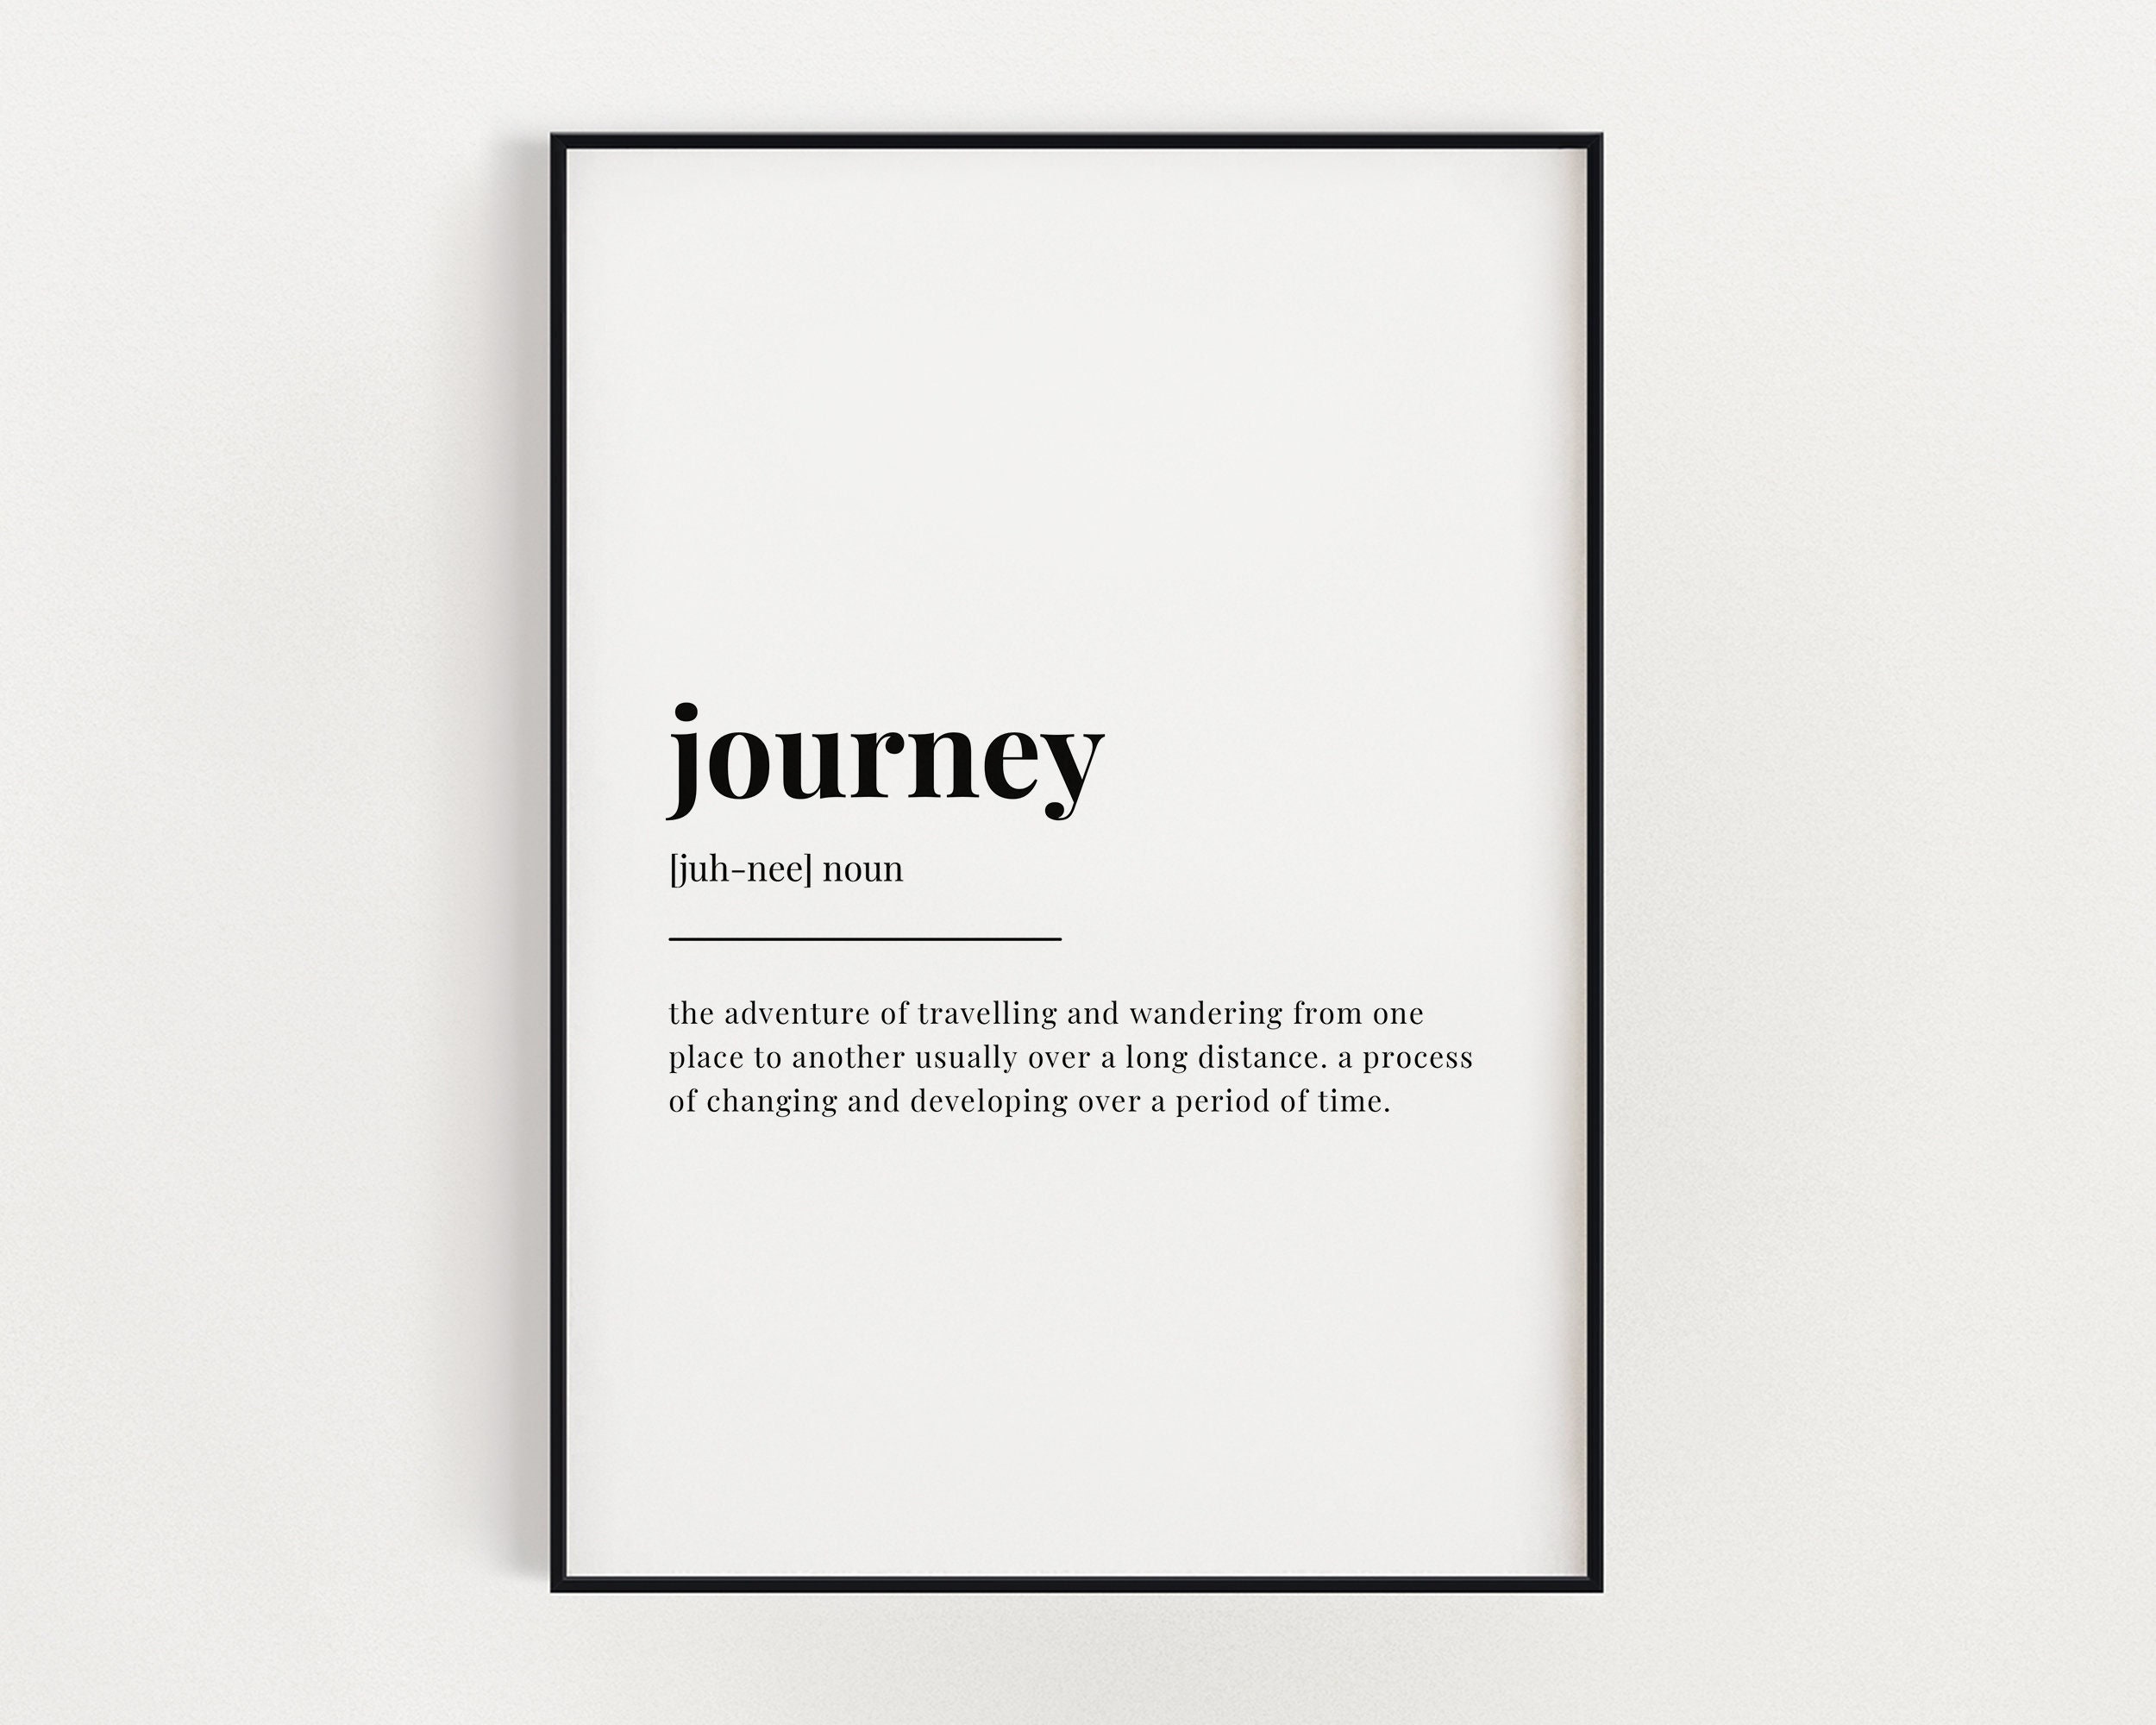 journey definition anglais